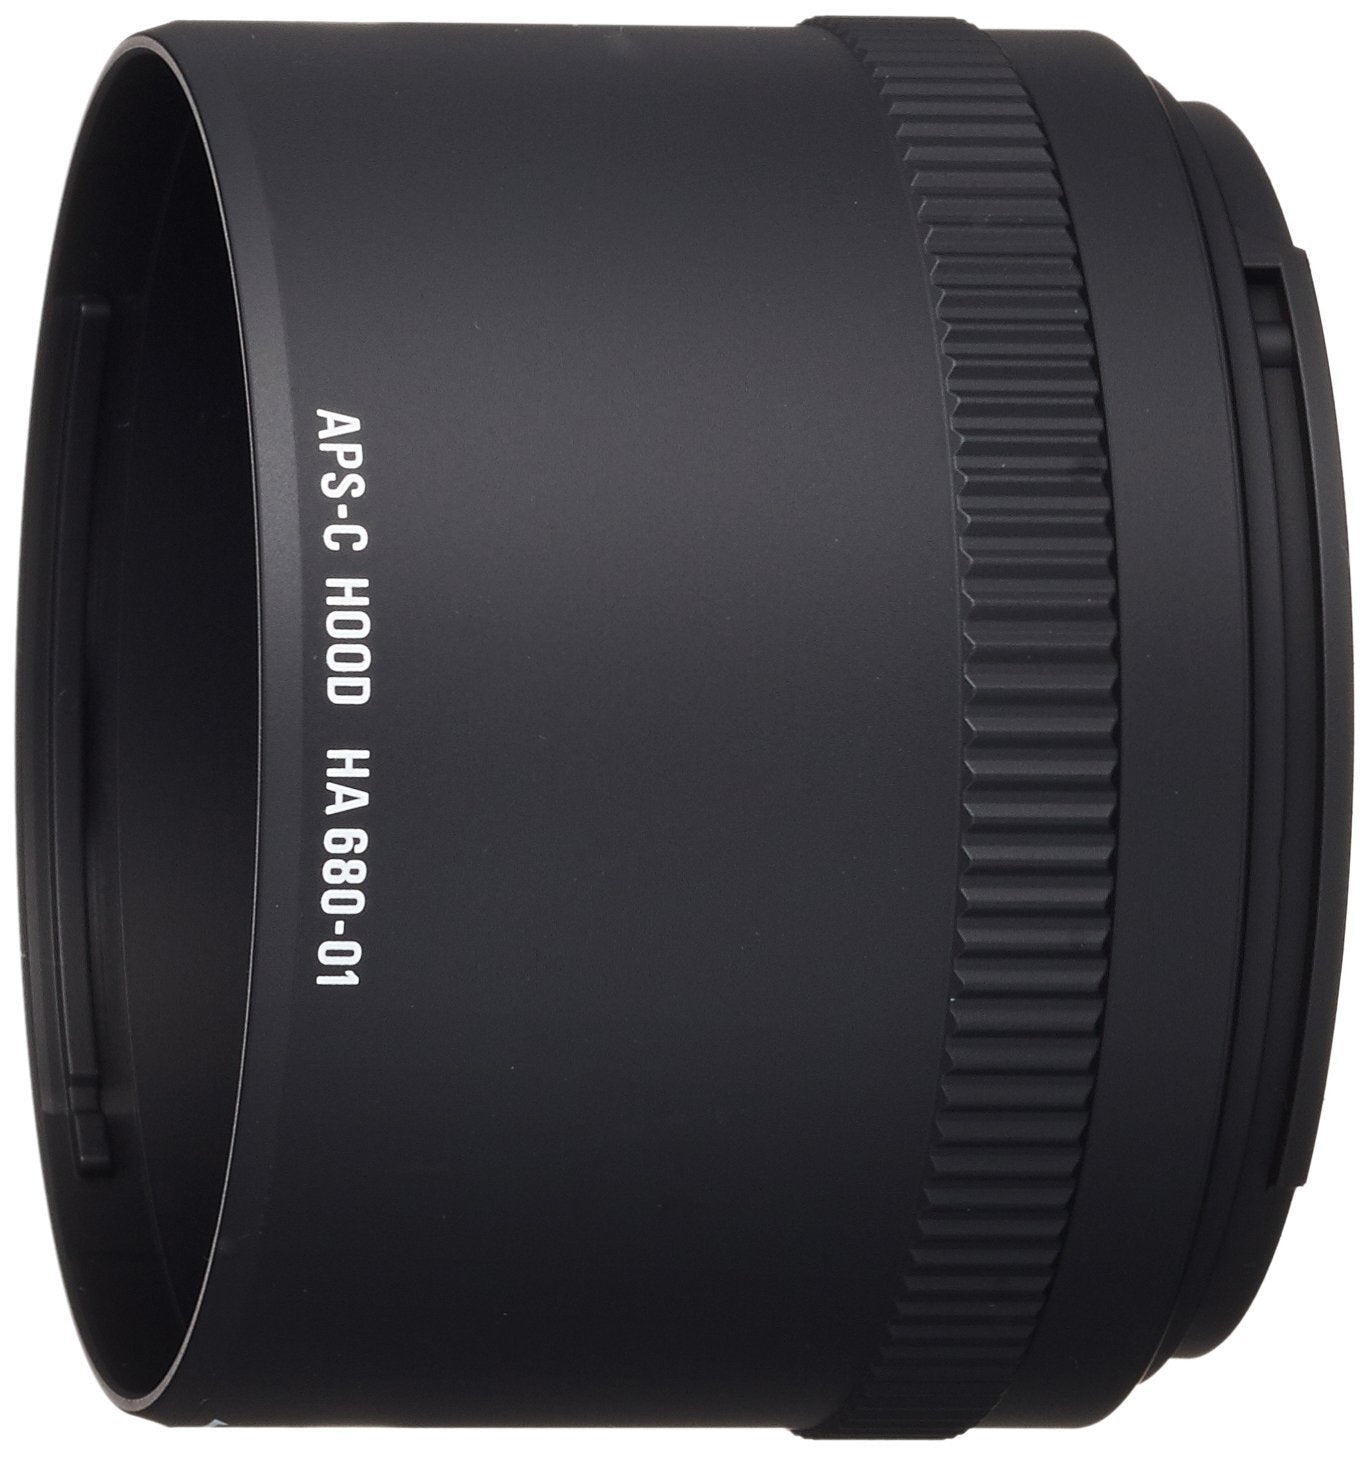 Sigma 105mm f/2.8 EX DG OS HSM Macro Lens hood